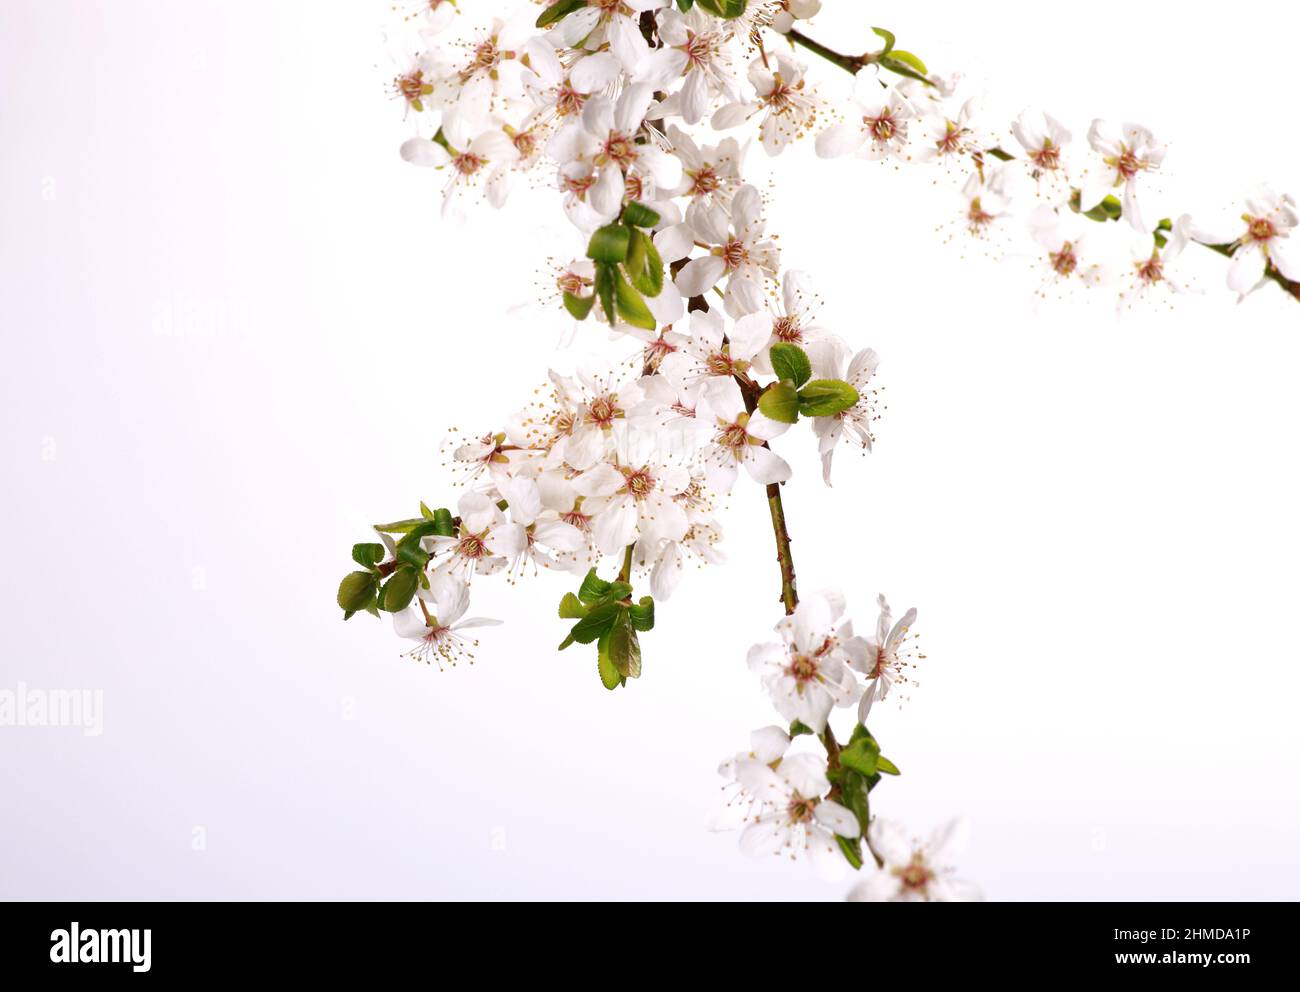 Blooming plum tree closeup. Spring white flowers. Plum-tree branch covered with white flowers and new foliage on white background. Stock Photo